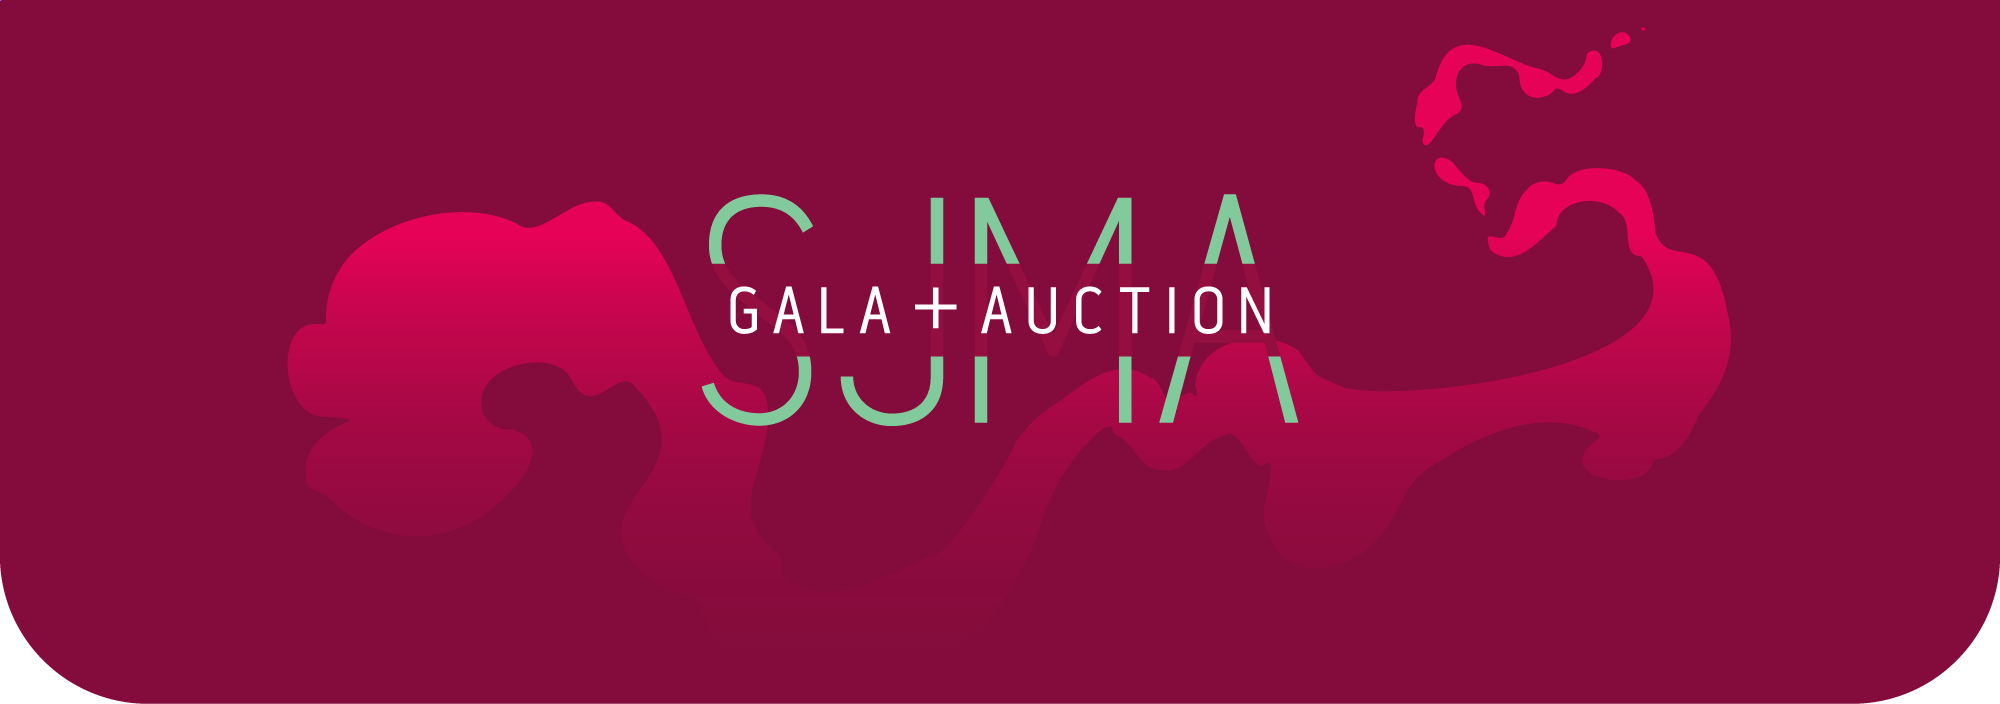 2021 Gala + Auction